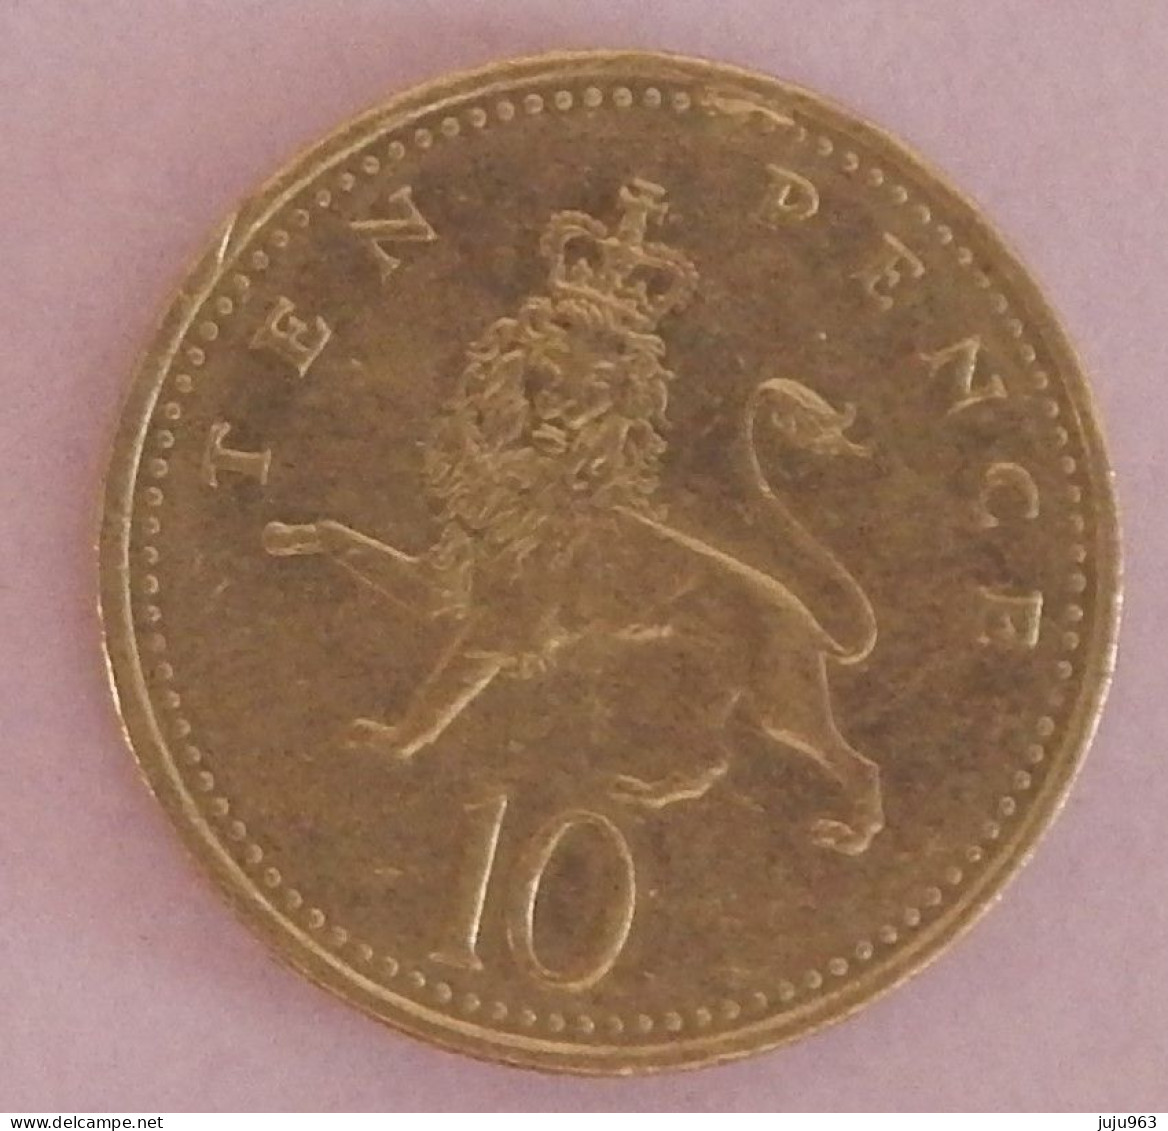 GRANDE BRETAGNE 10 PENCE ANNEE 1996 VOIR 2 SCANS - 10 Pence & 10 New Pence